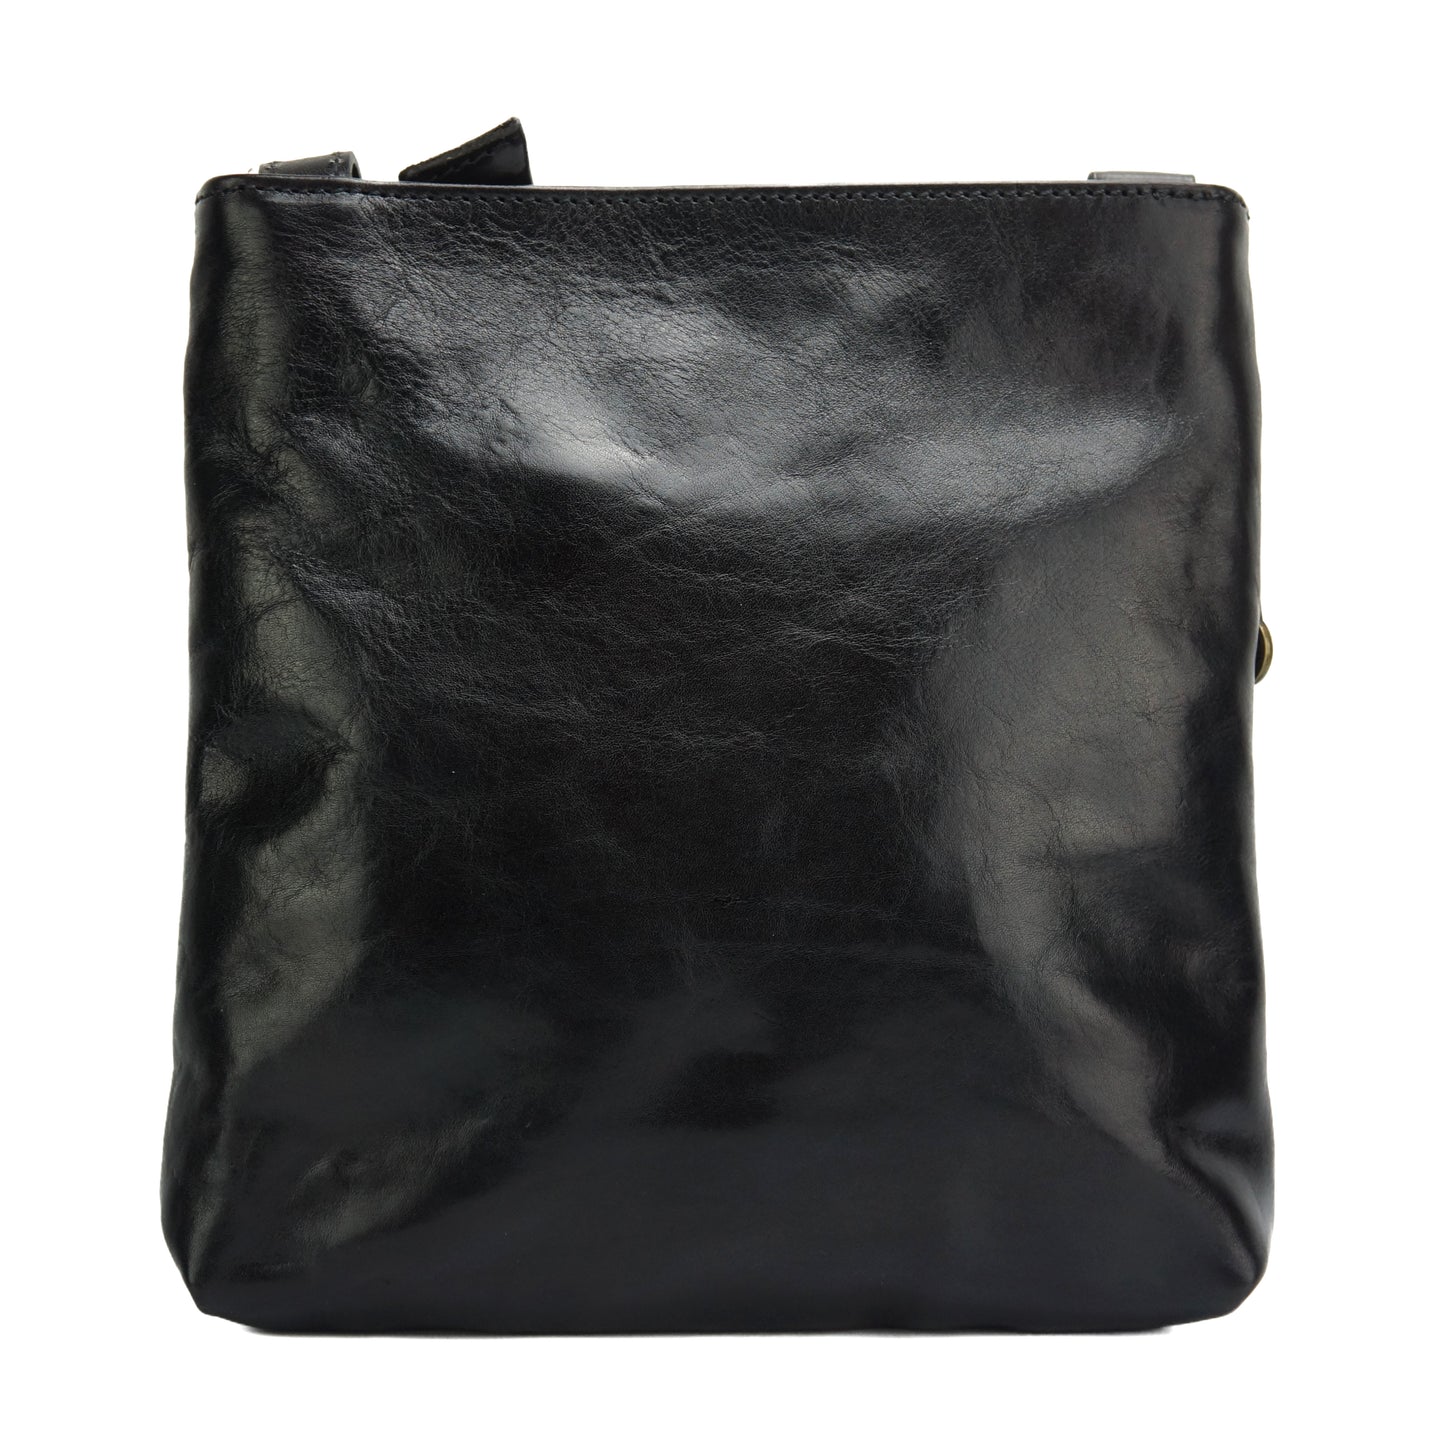 Chiara leather cross body bag